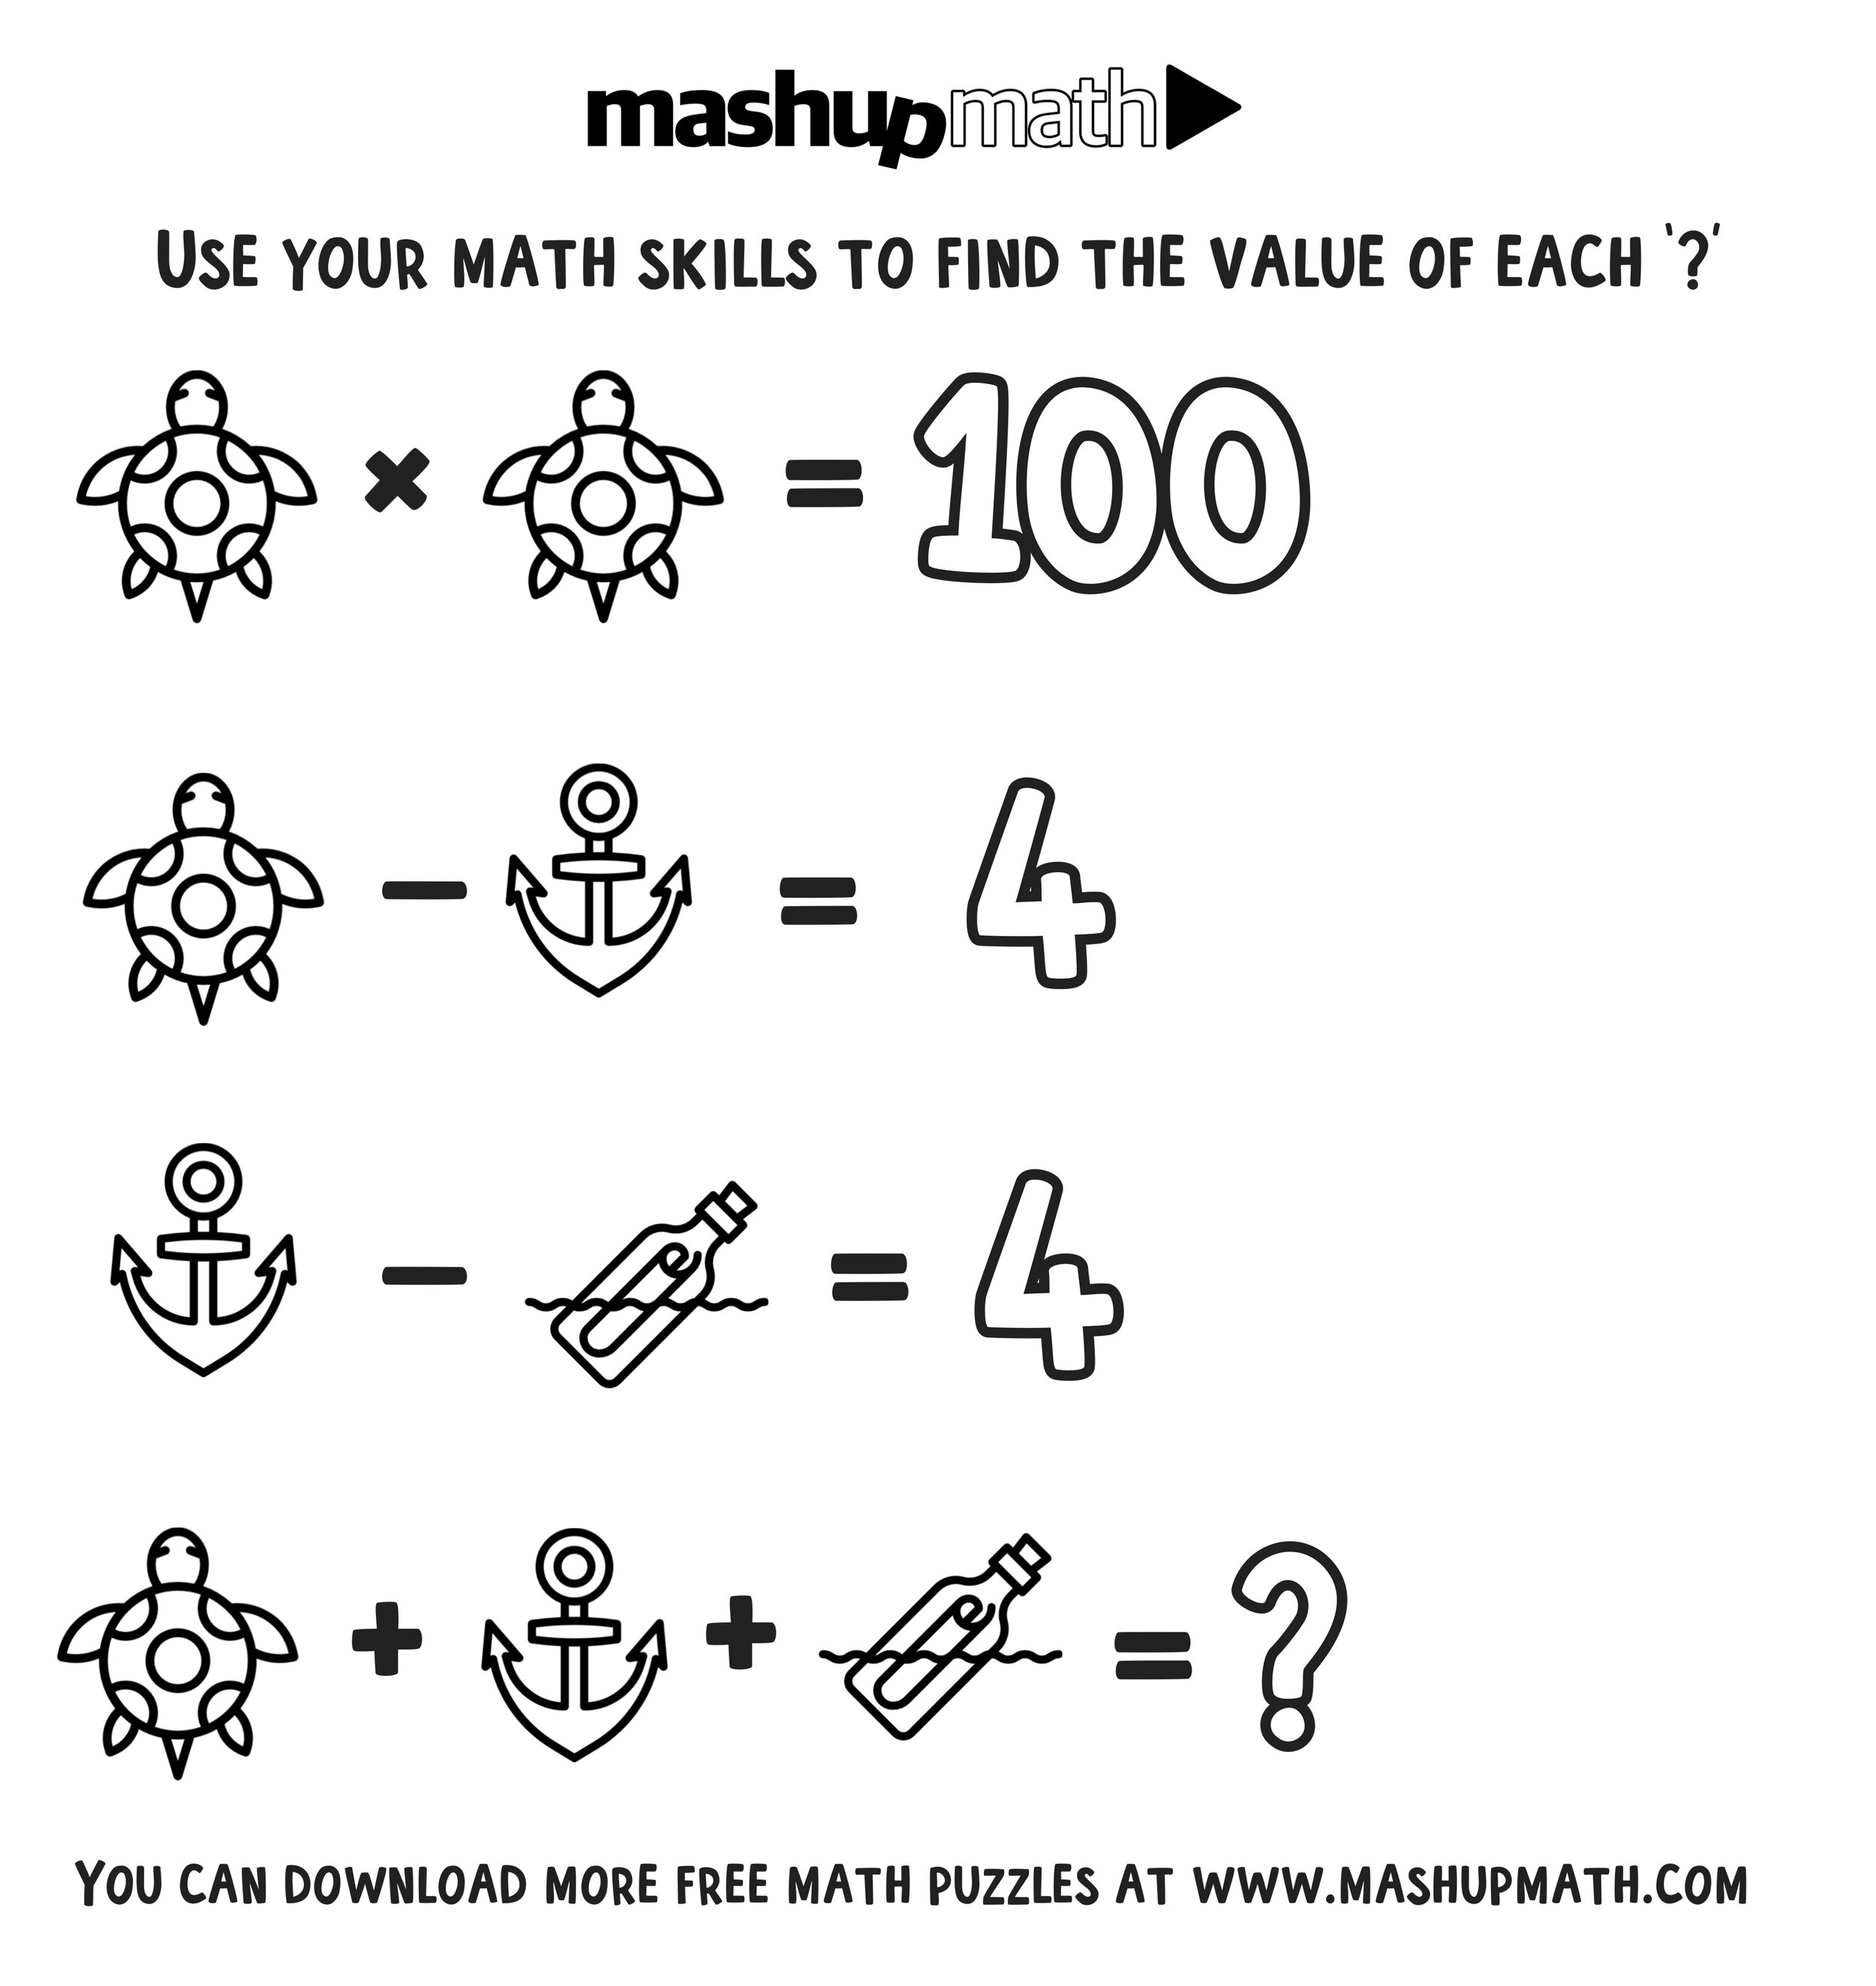 free math coloring worksheets for 3rd and 4th grade mashup math